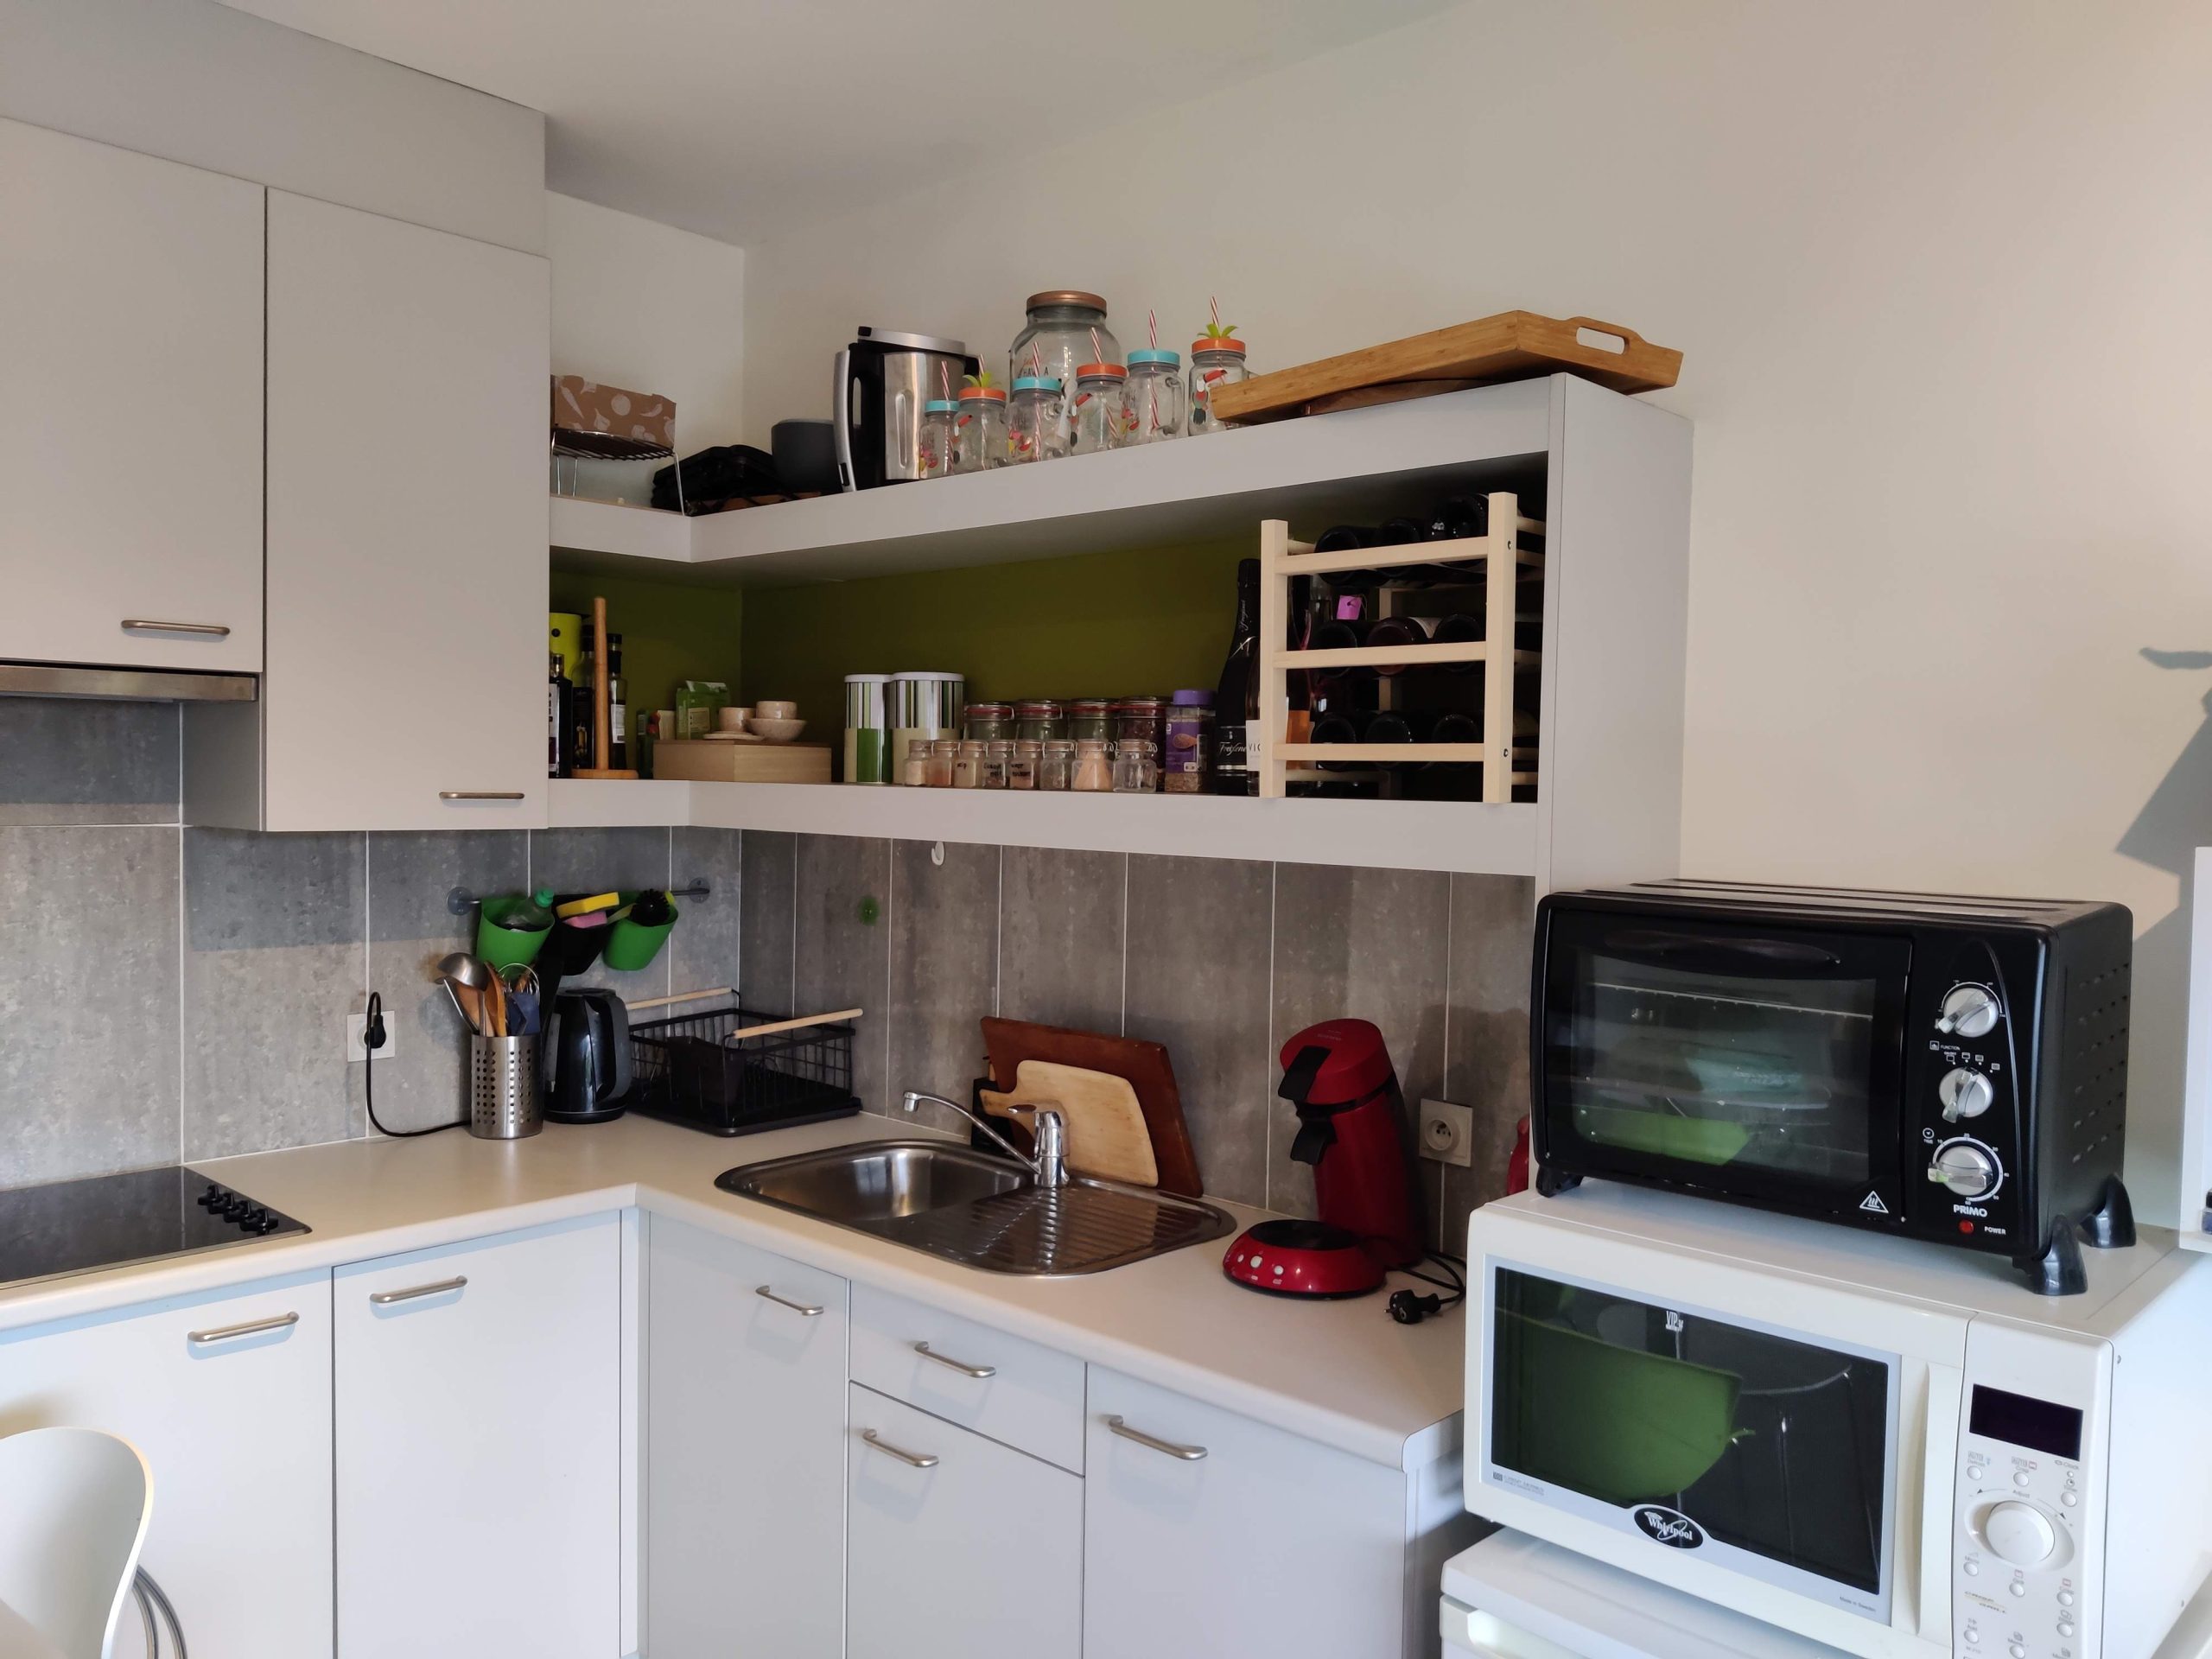 apartment for rent in antwerp - kitchen